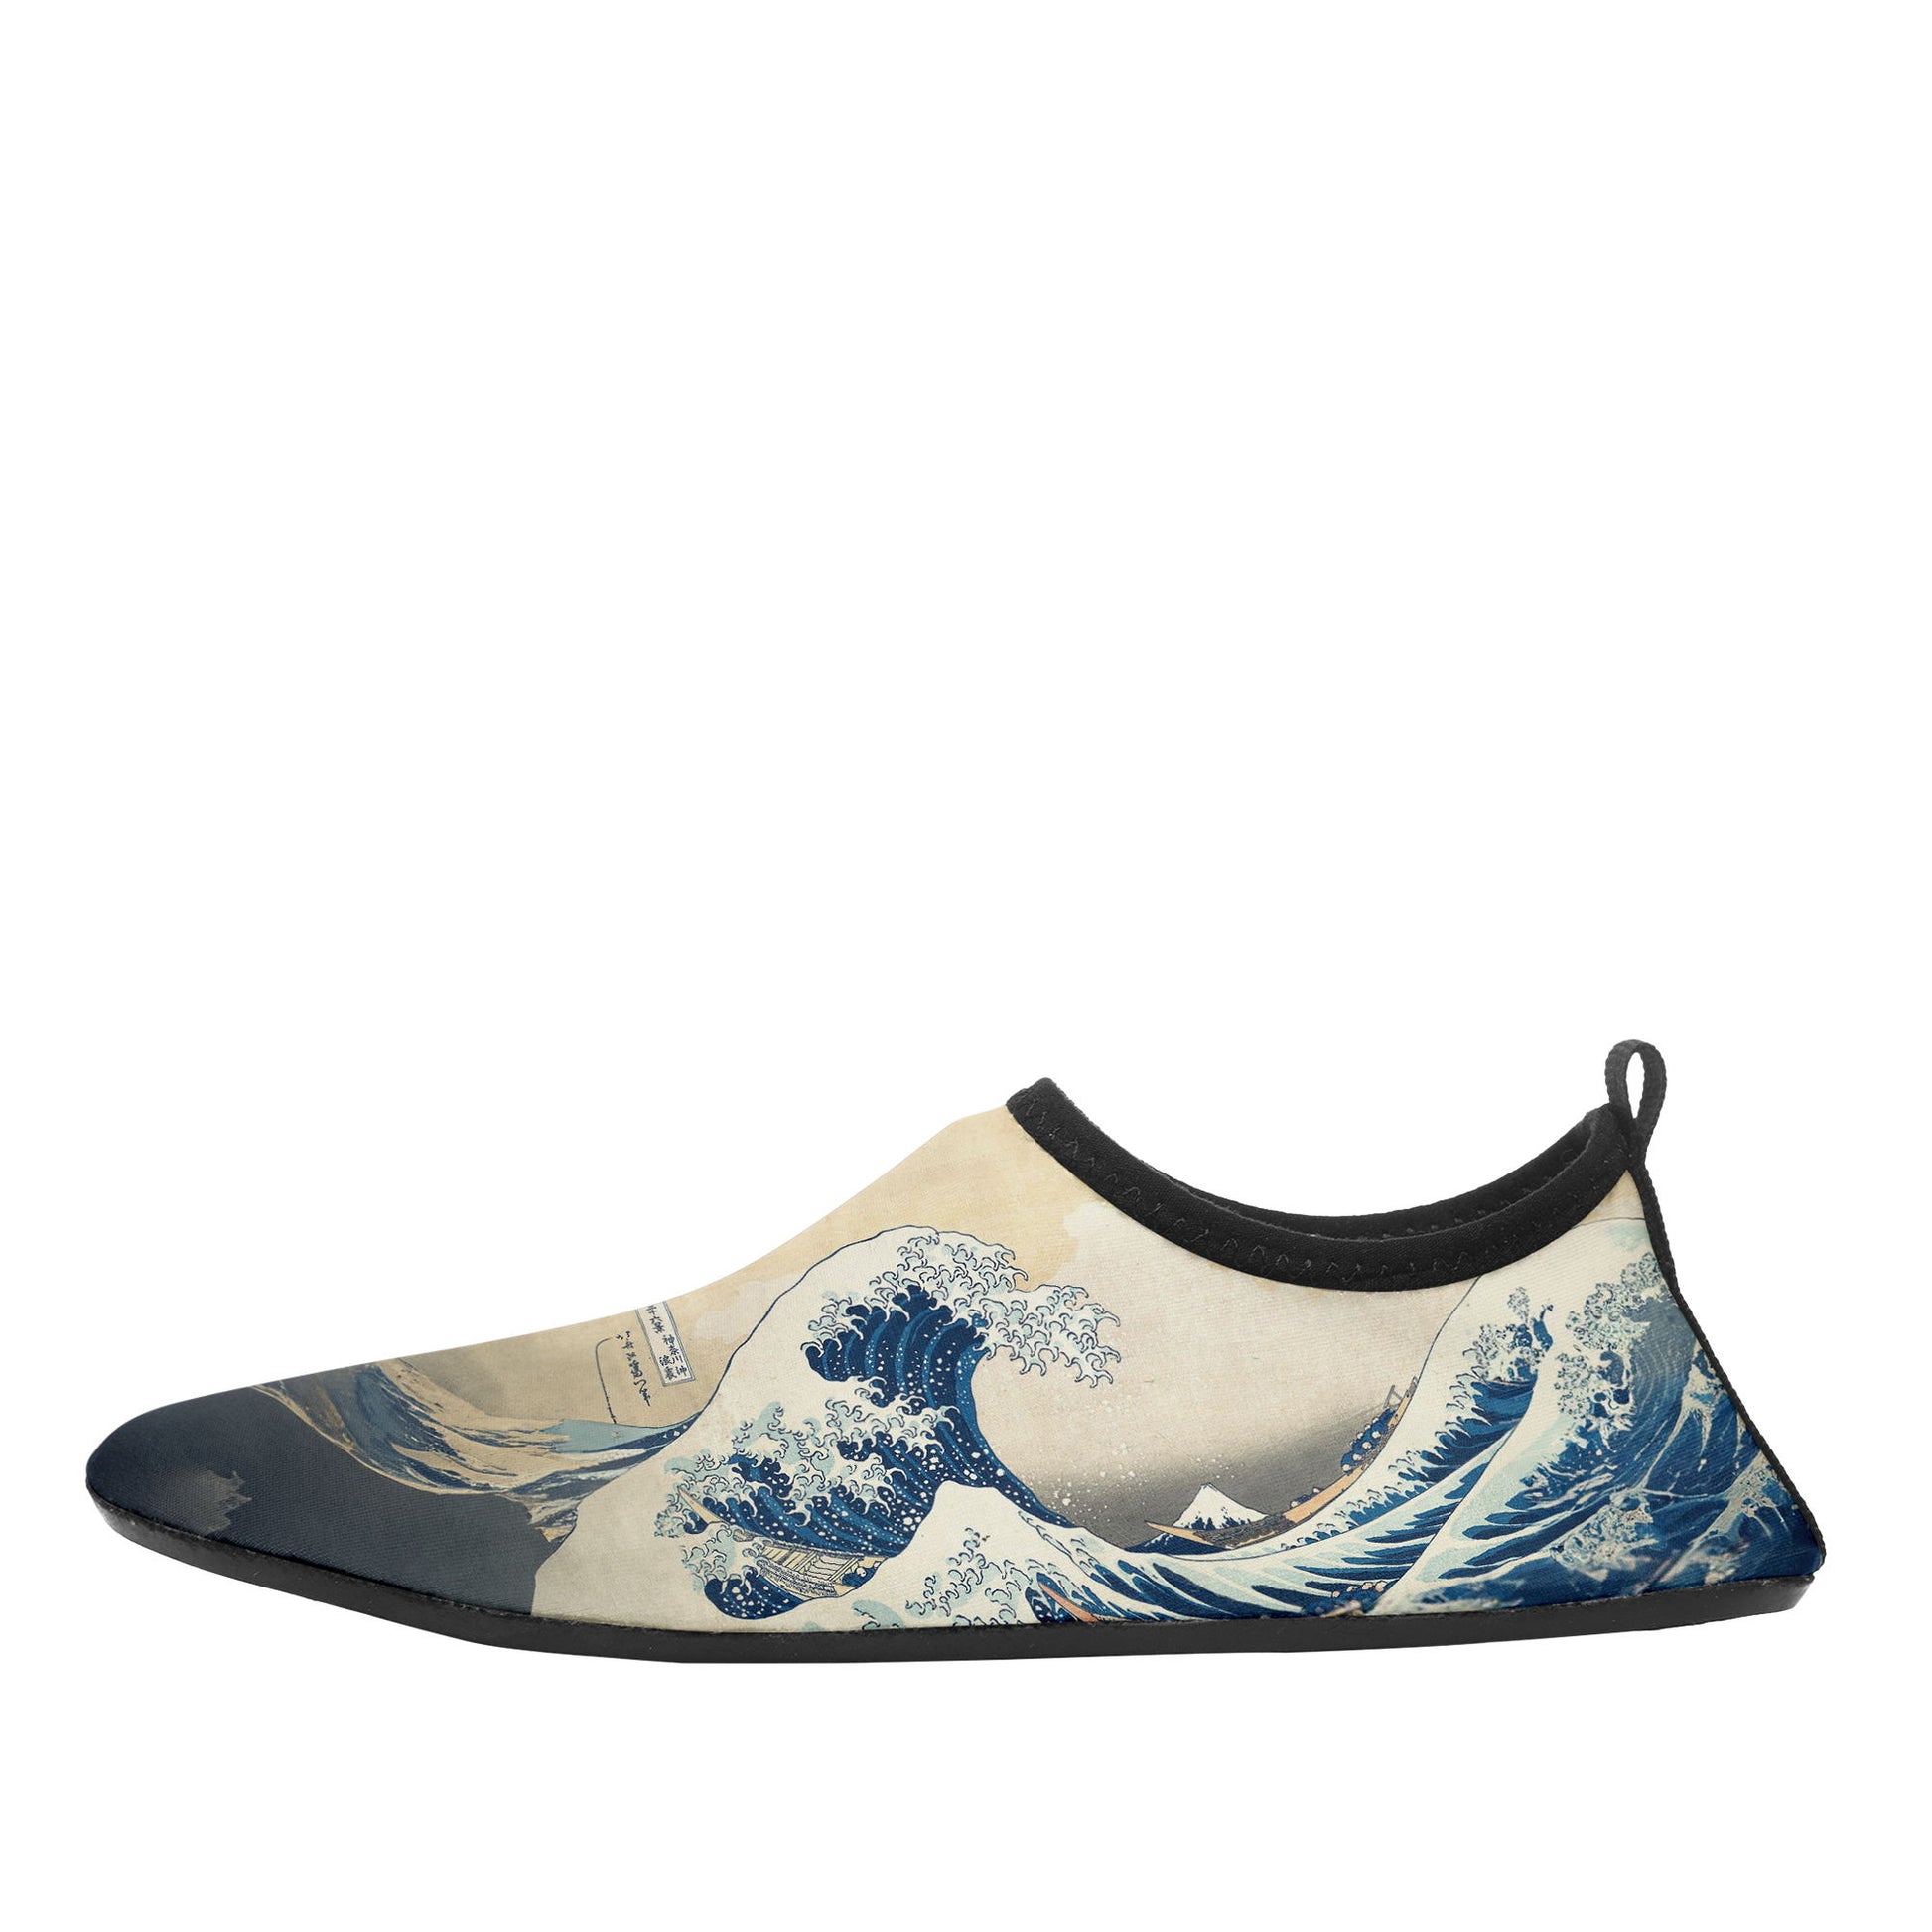 customized printed aqua shoes 1902 ukiyo-e katsushika hokusai's the great wave off kanagawa beach wading shoes 1